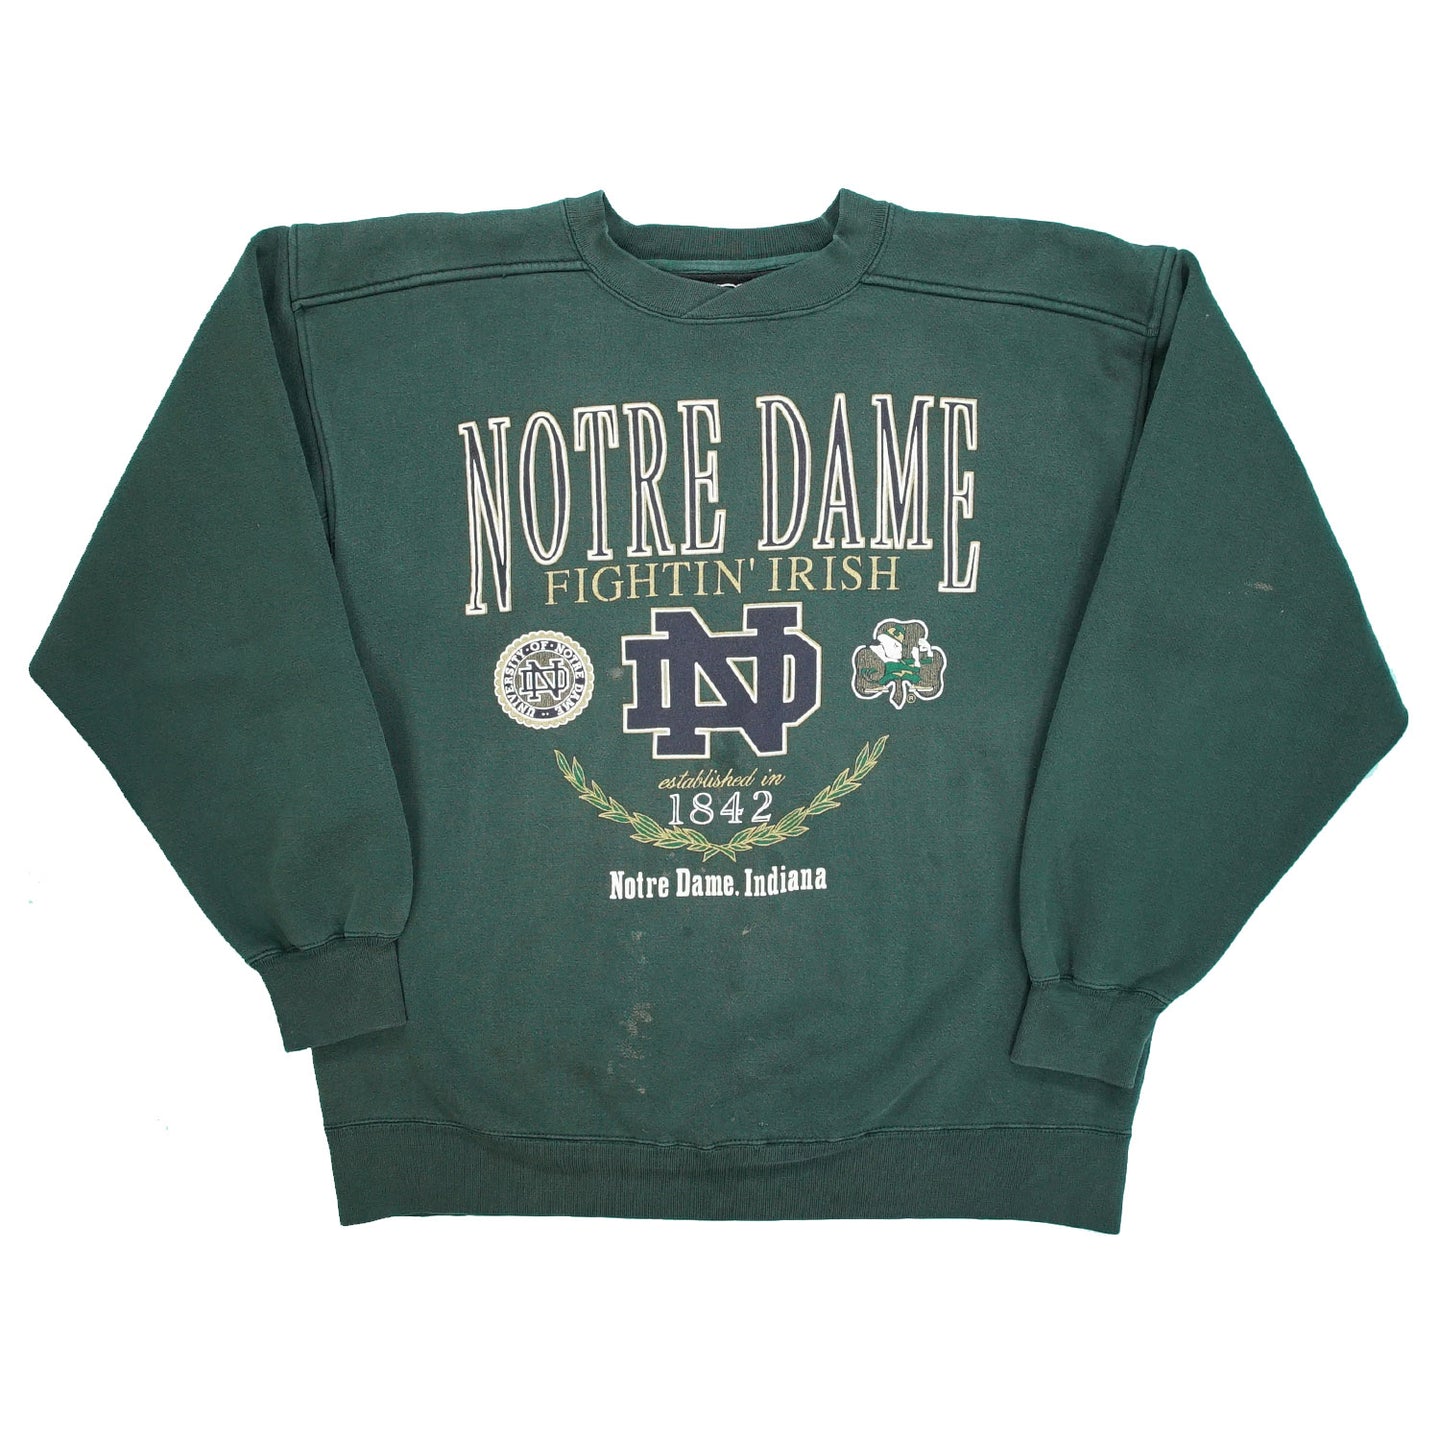 Notre Dame Fighting Irish crewneck XL